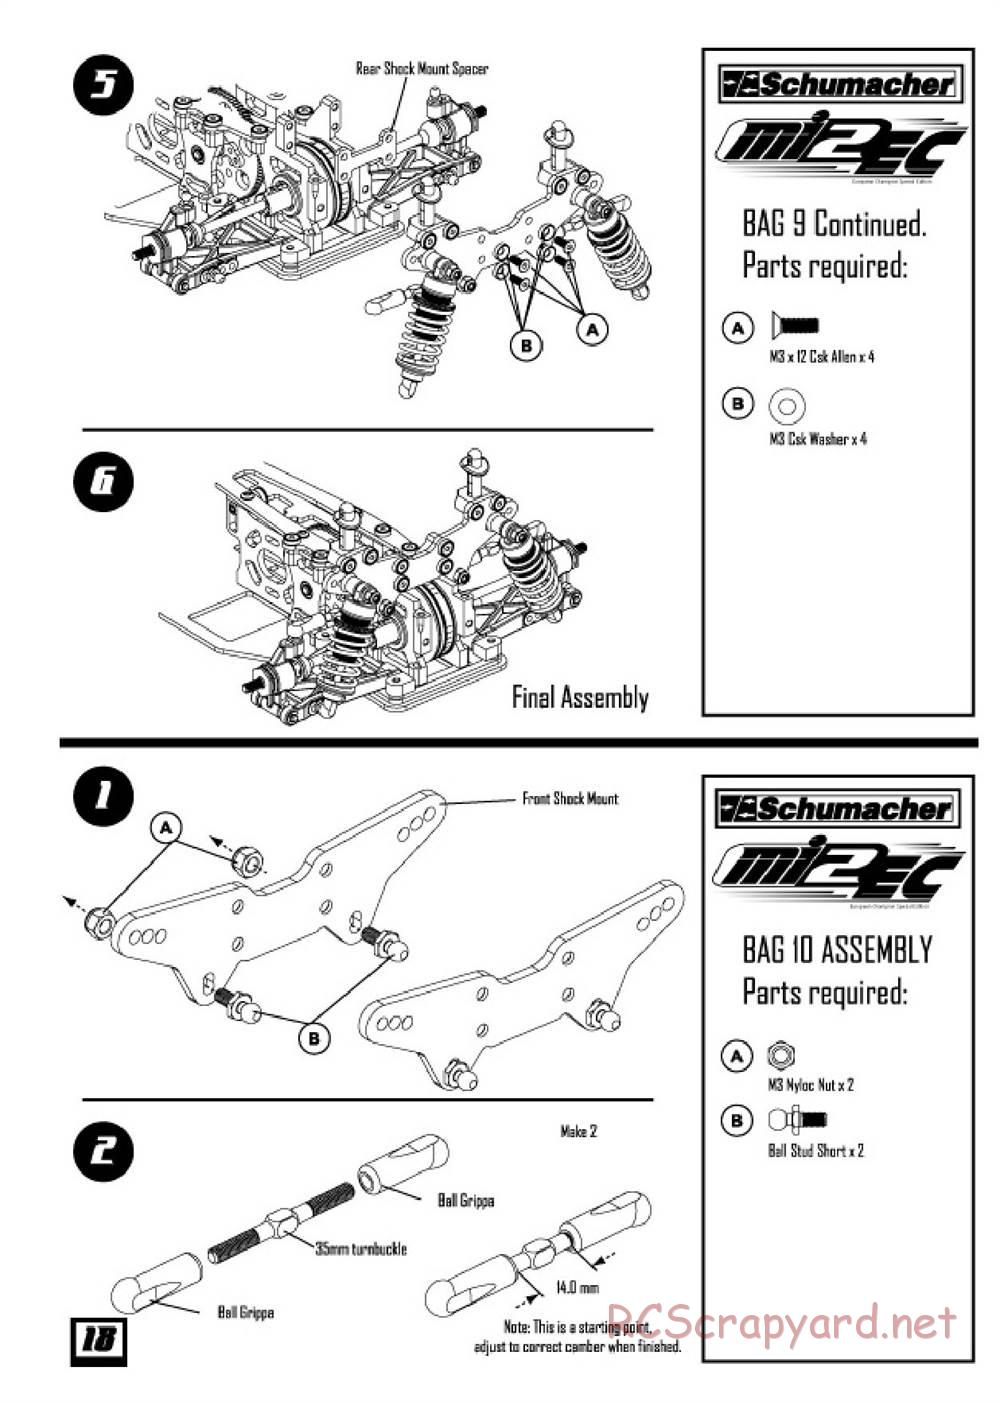 Schumacher - Mi2 EC - Manual - Page 20